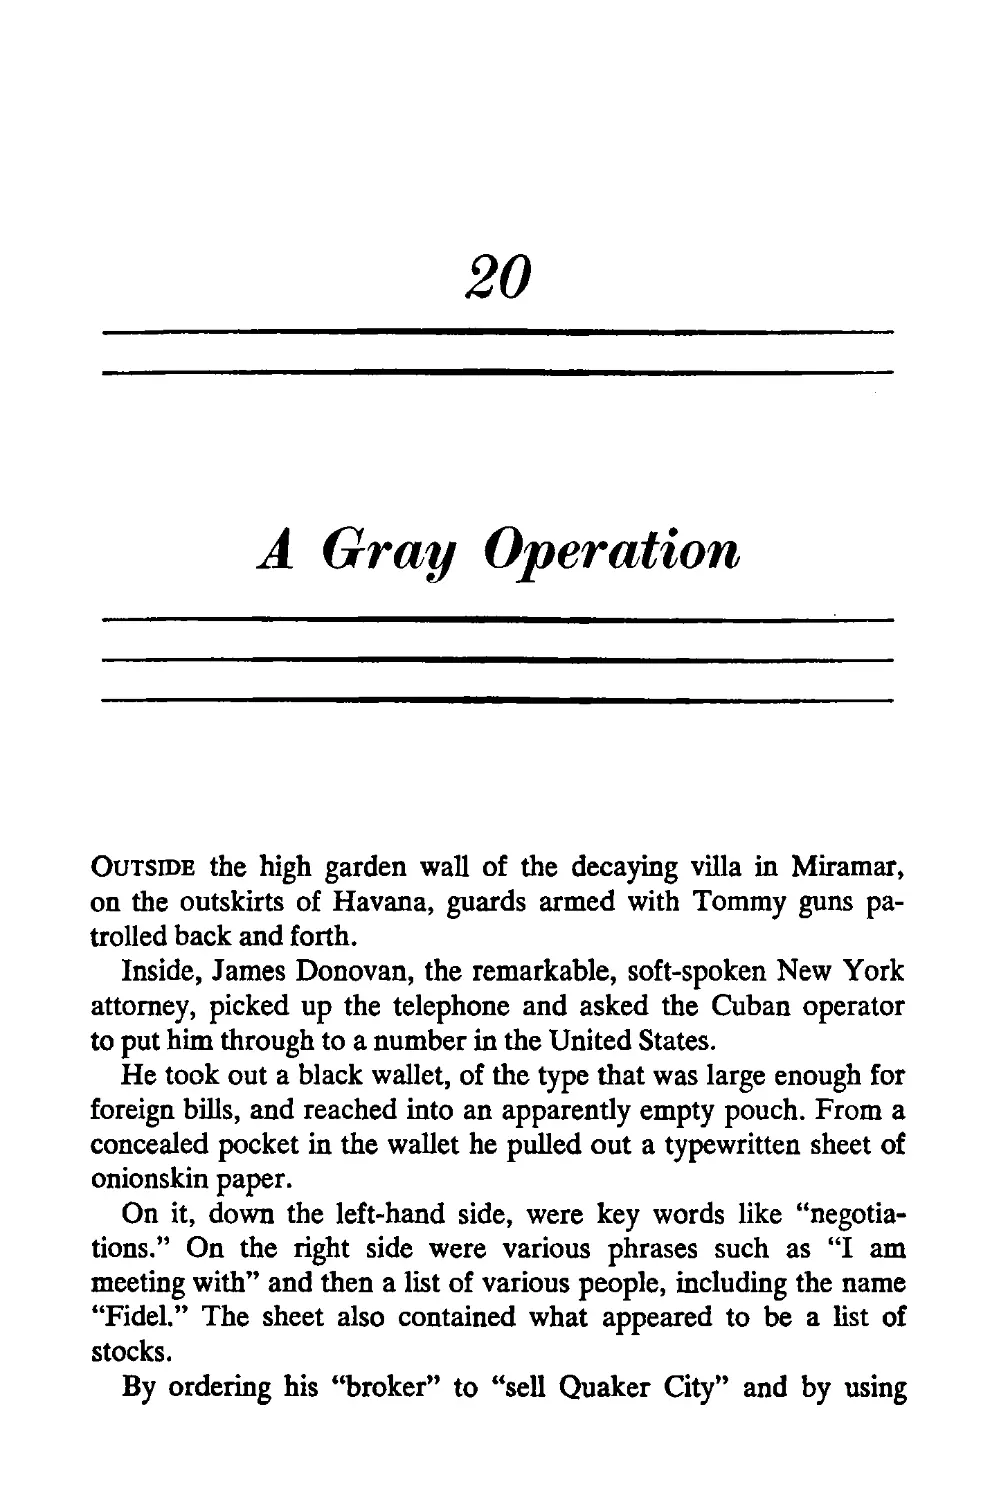 20. A Gray Operation